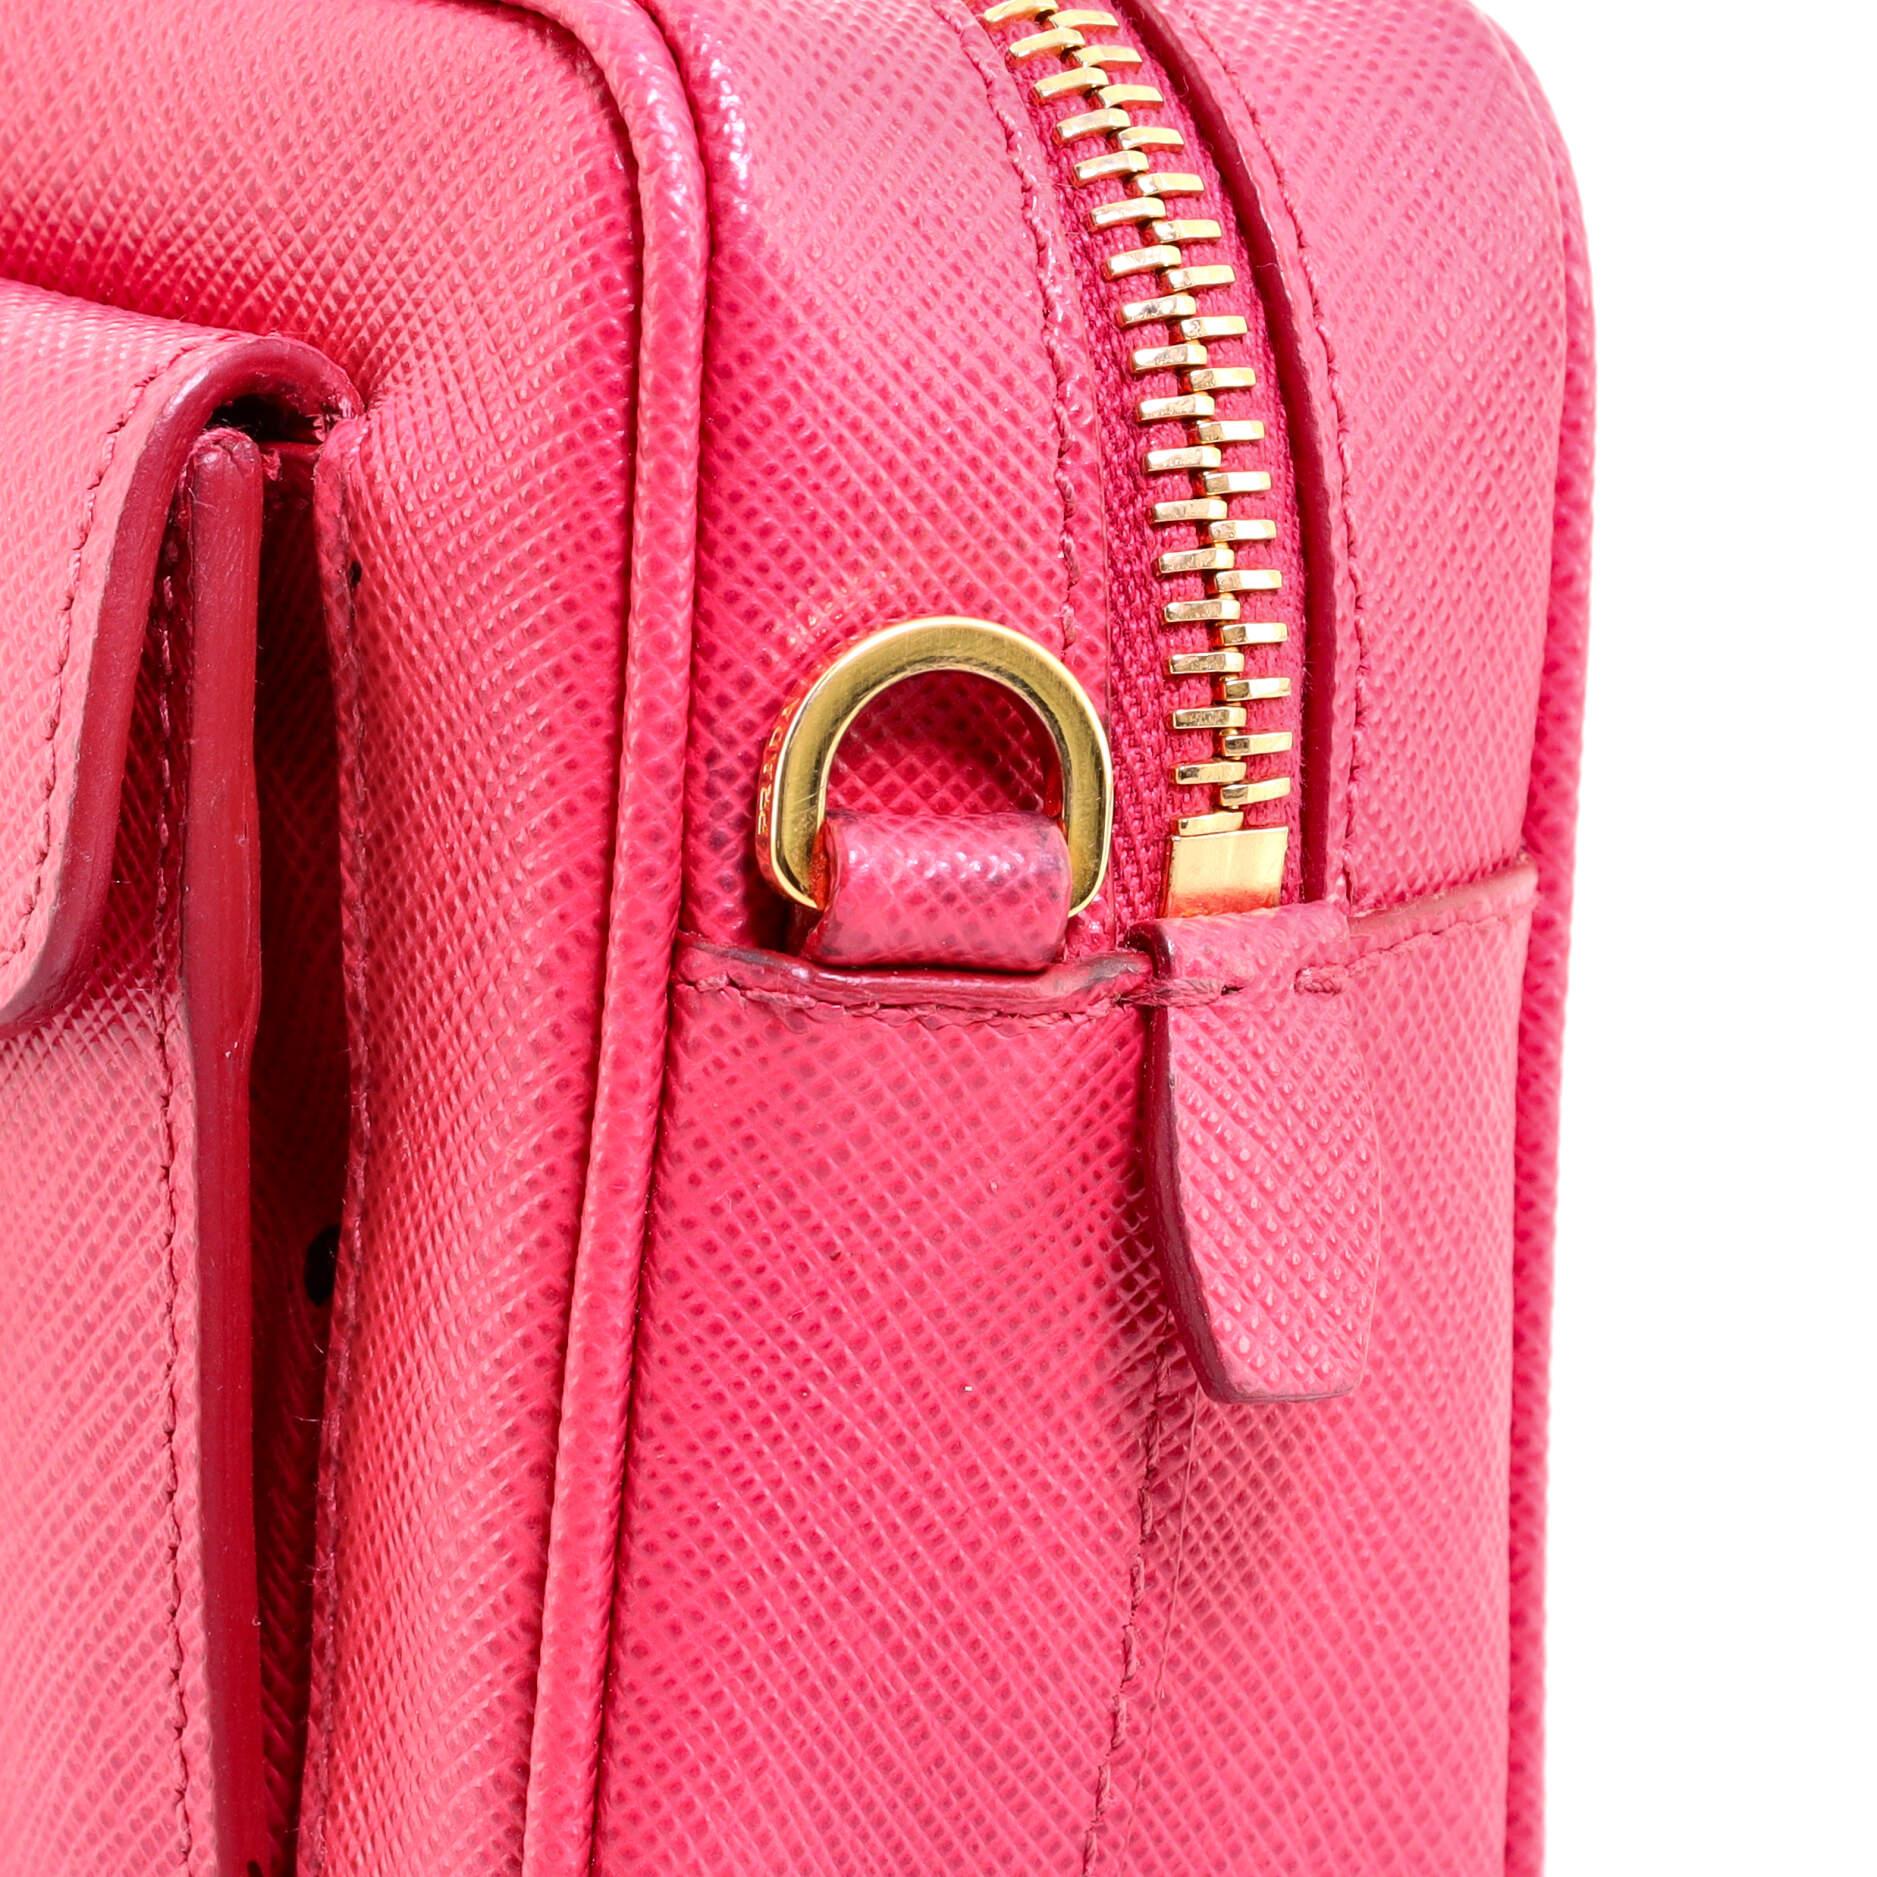 Women's or Men's Prada Pushlock Pocket Camera Bag Saffiano Leather Small